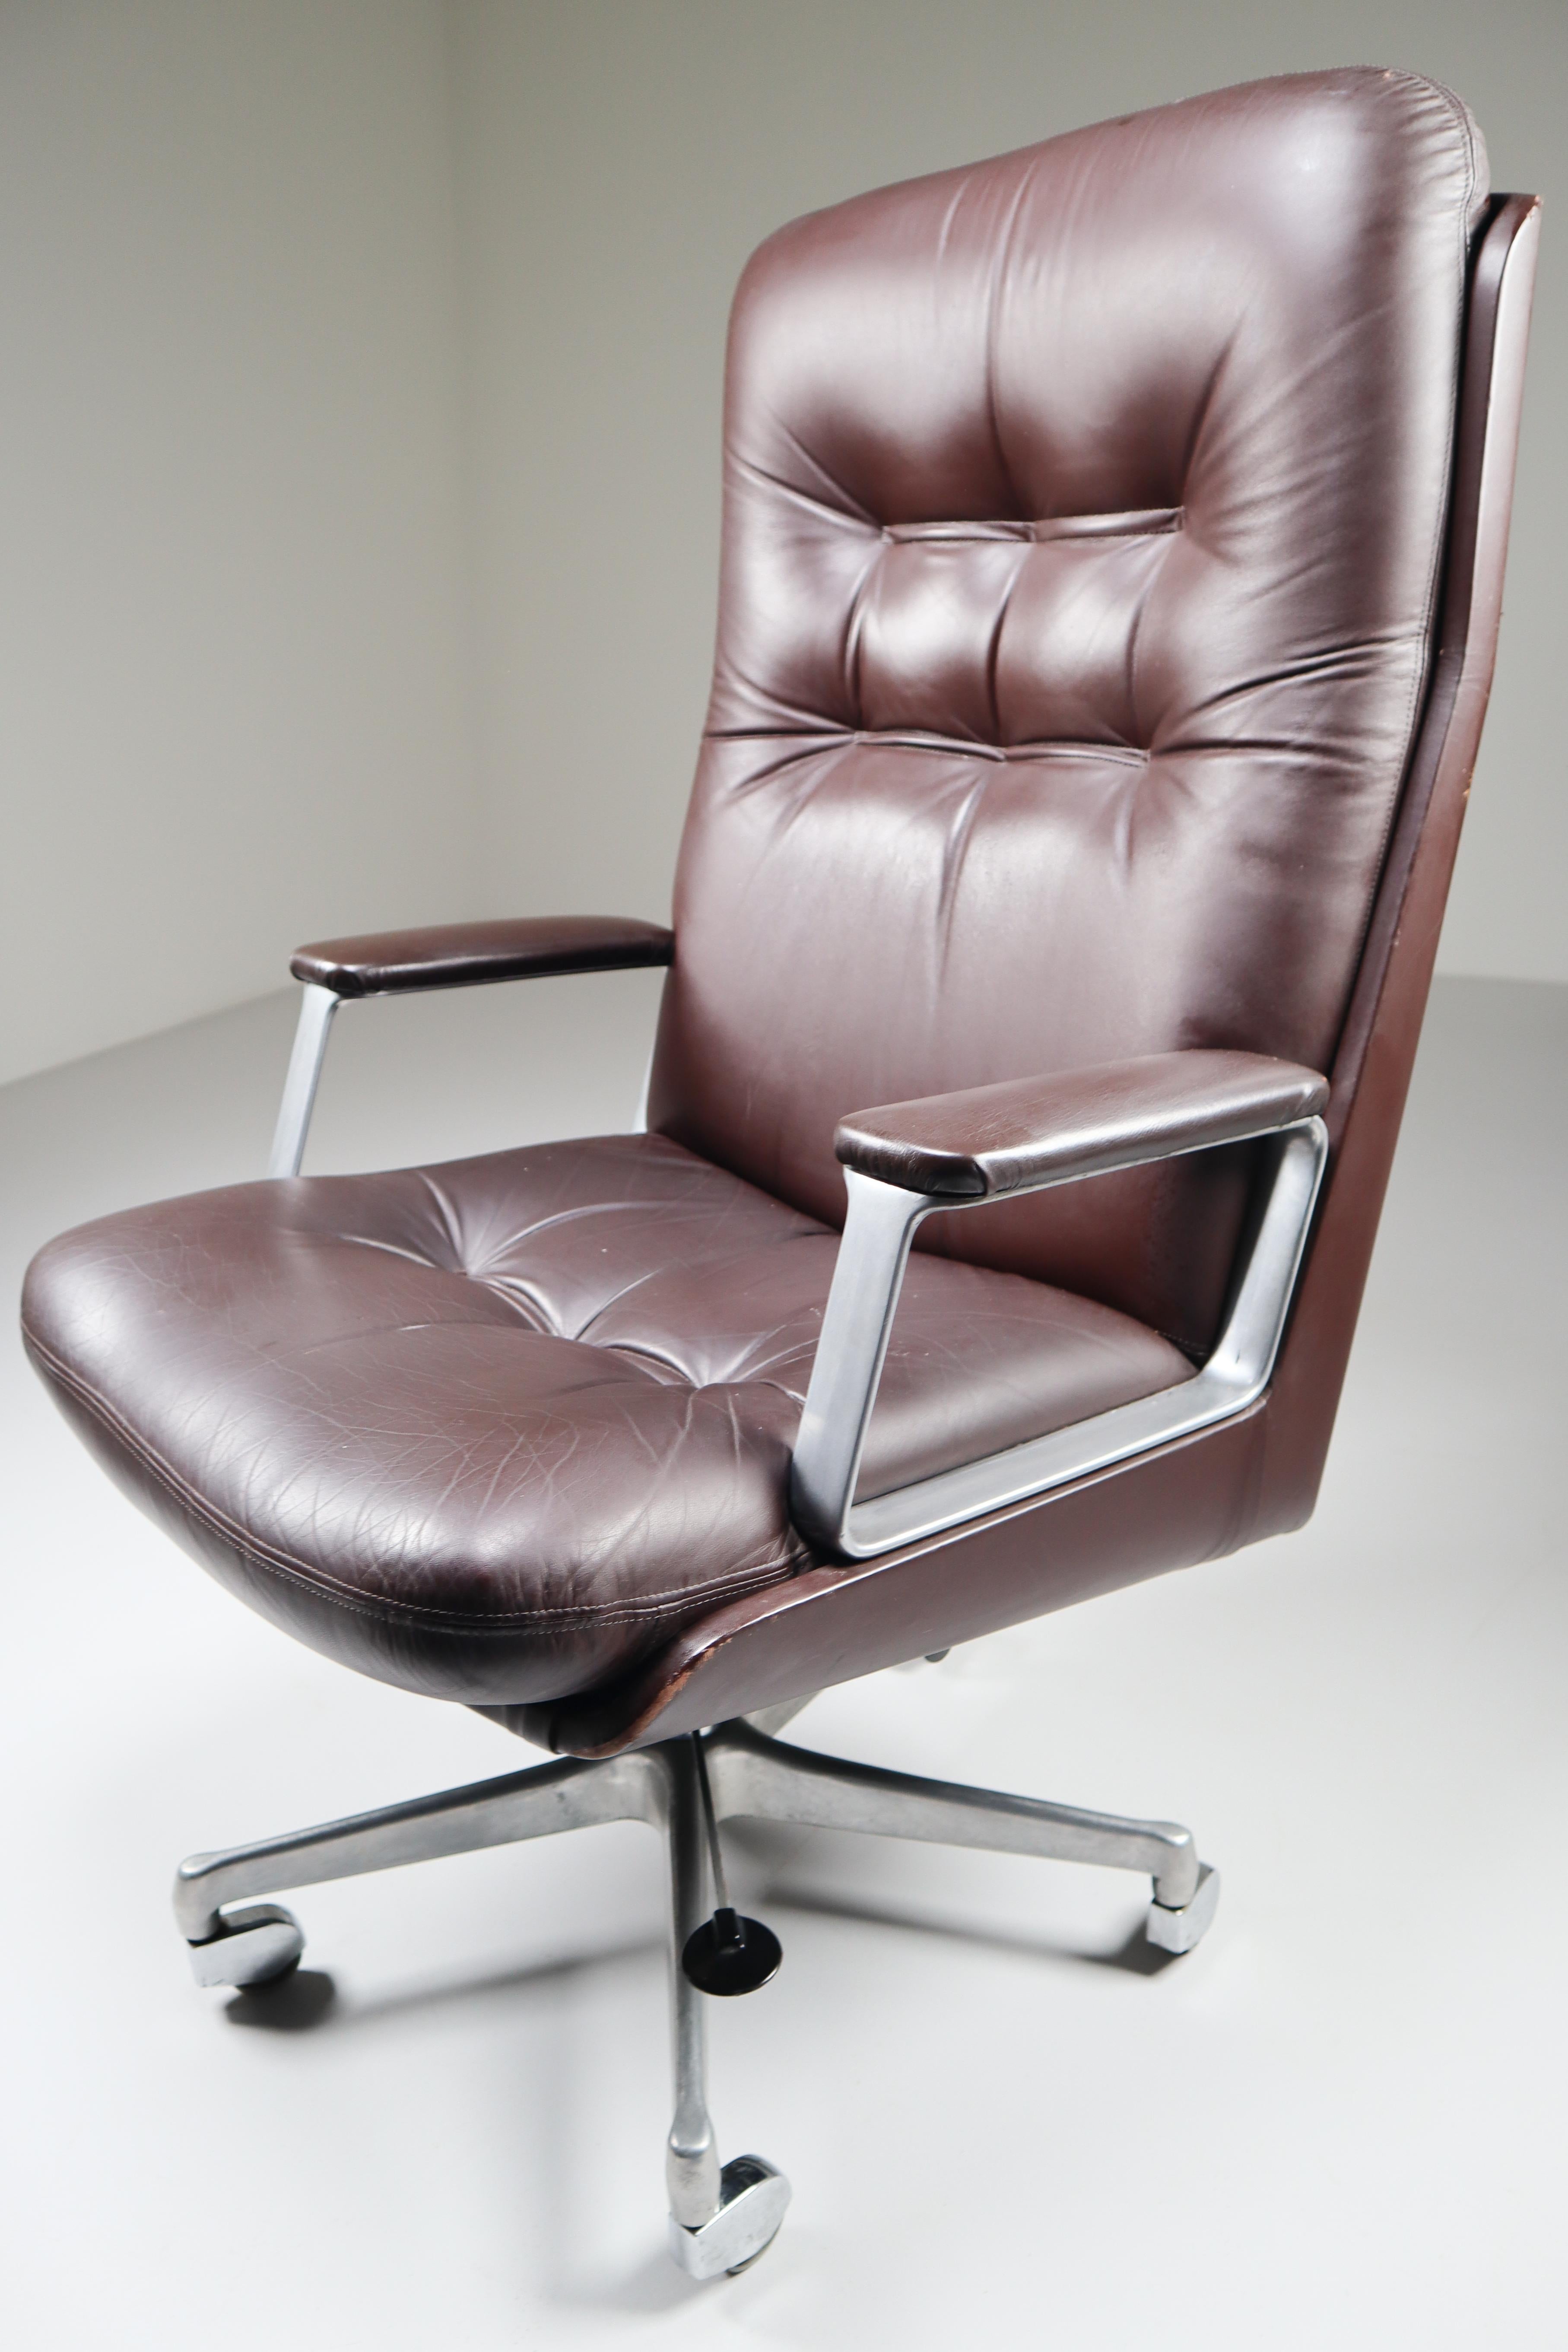 20th Century Executive Office High Back Chair by Osvaldo Borsani for Tecno, Italy, 1972